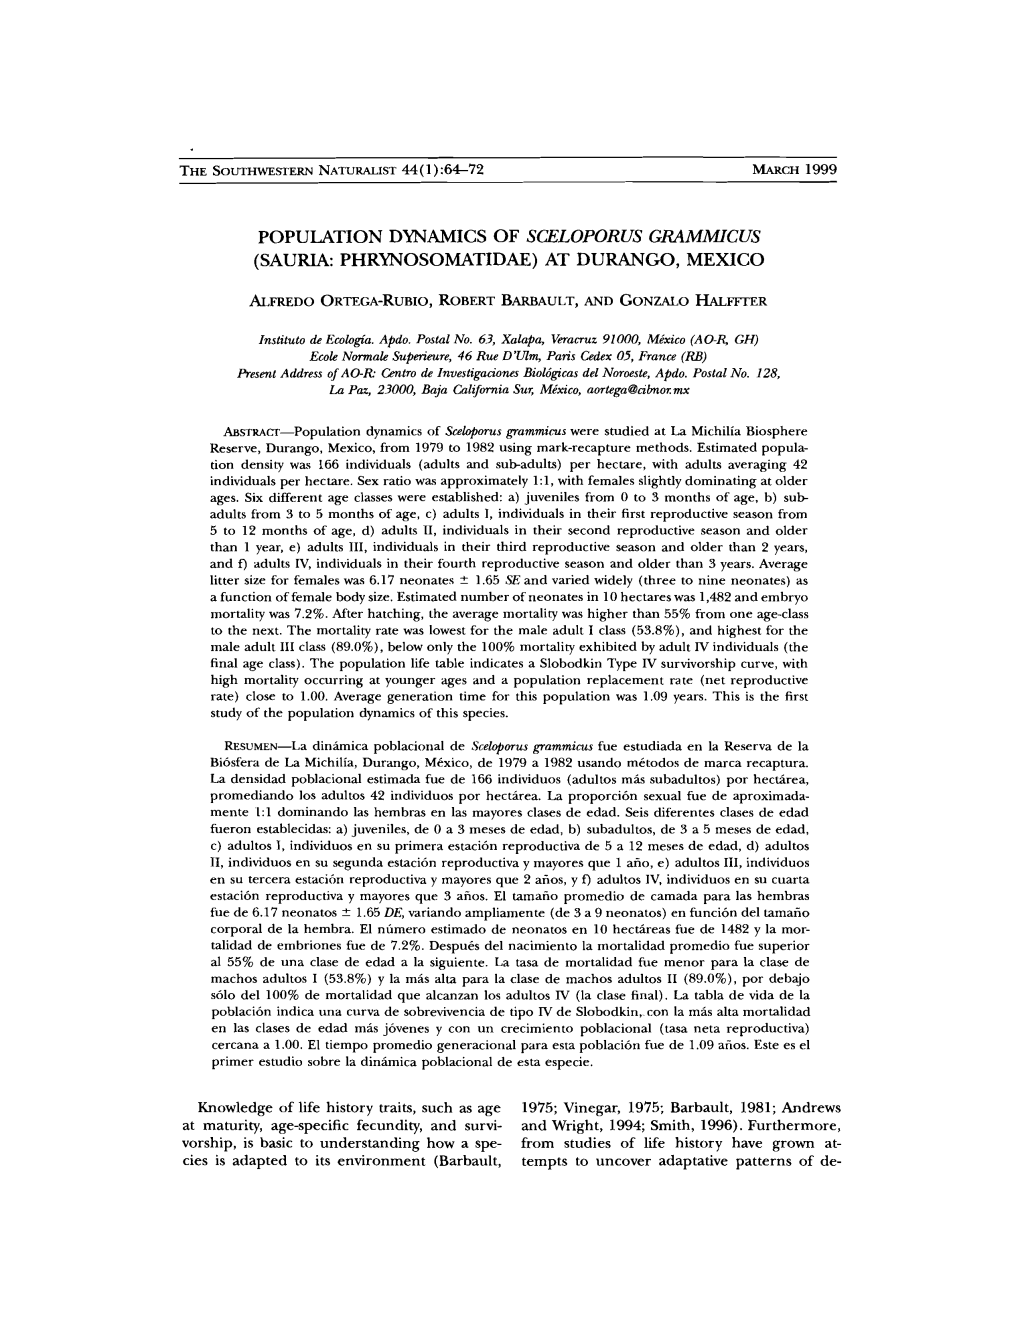 Population Dynamics of Sceloporus Grammicus (Saurw Phrynosomatidae) at Durango, Mexico